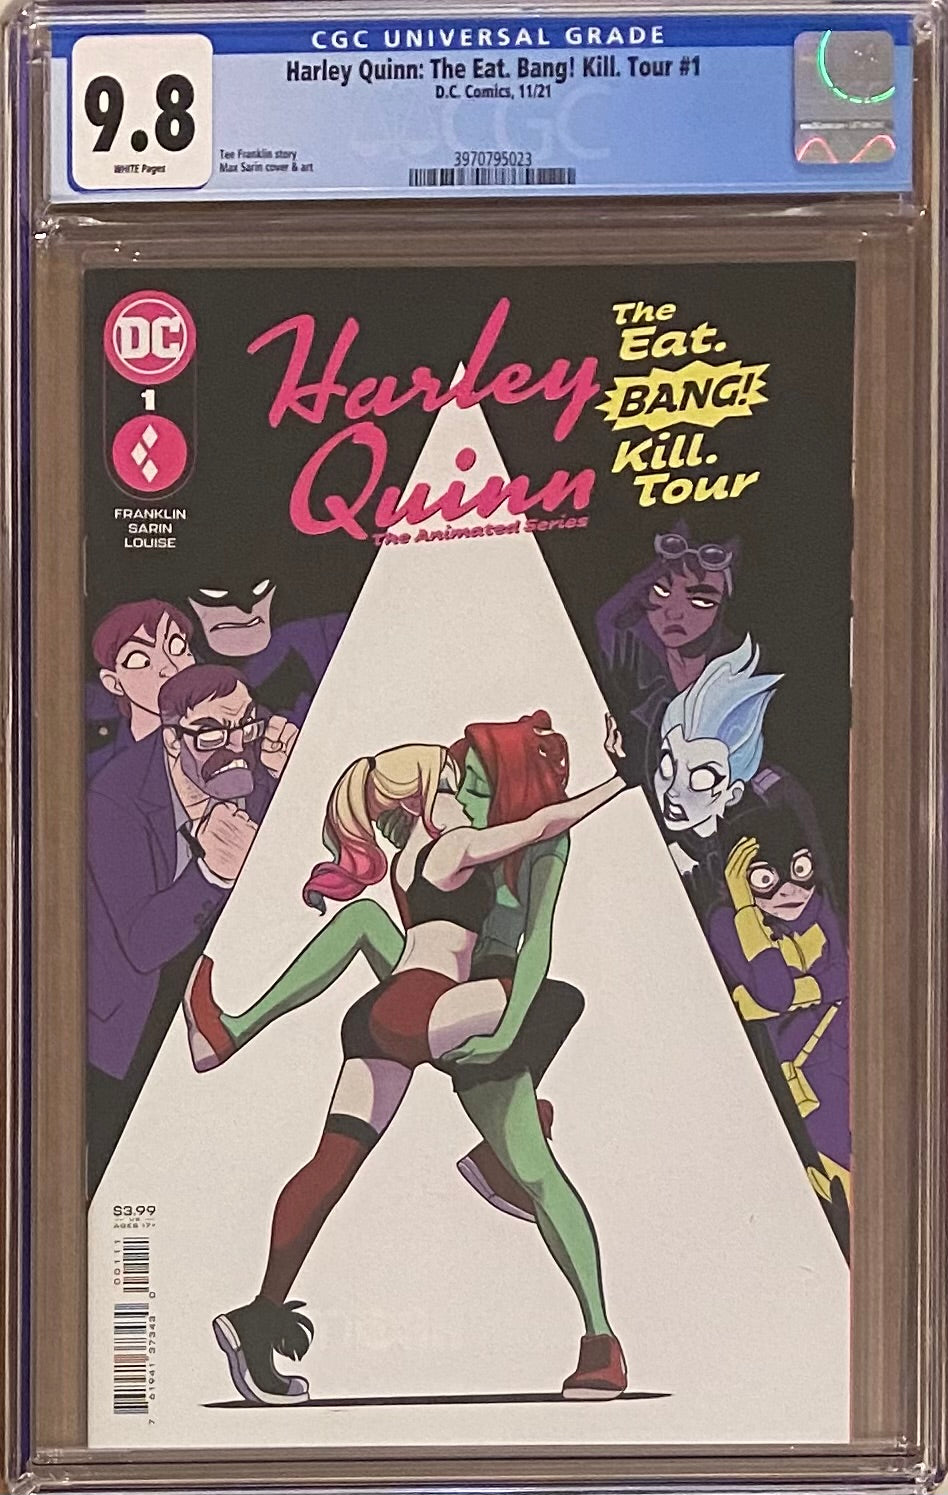 Harley Quinn: The Animated Series - The Eat, Bang! Kill Tour #1 CGC 9.8